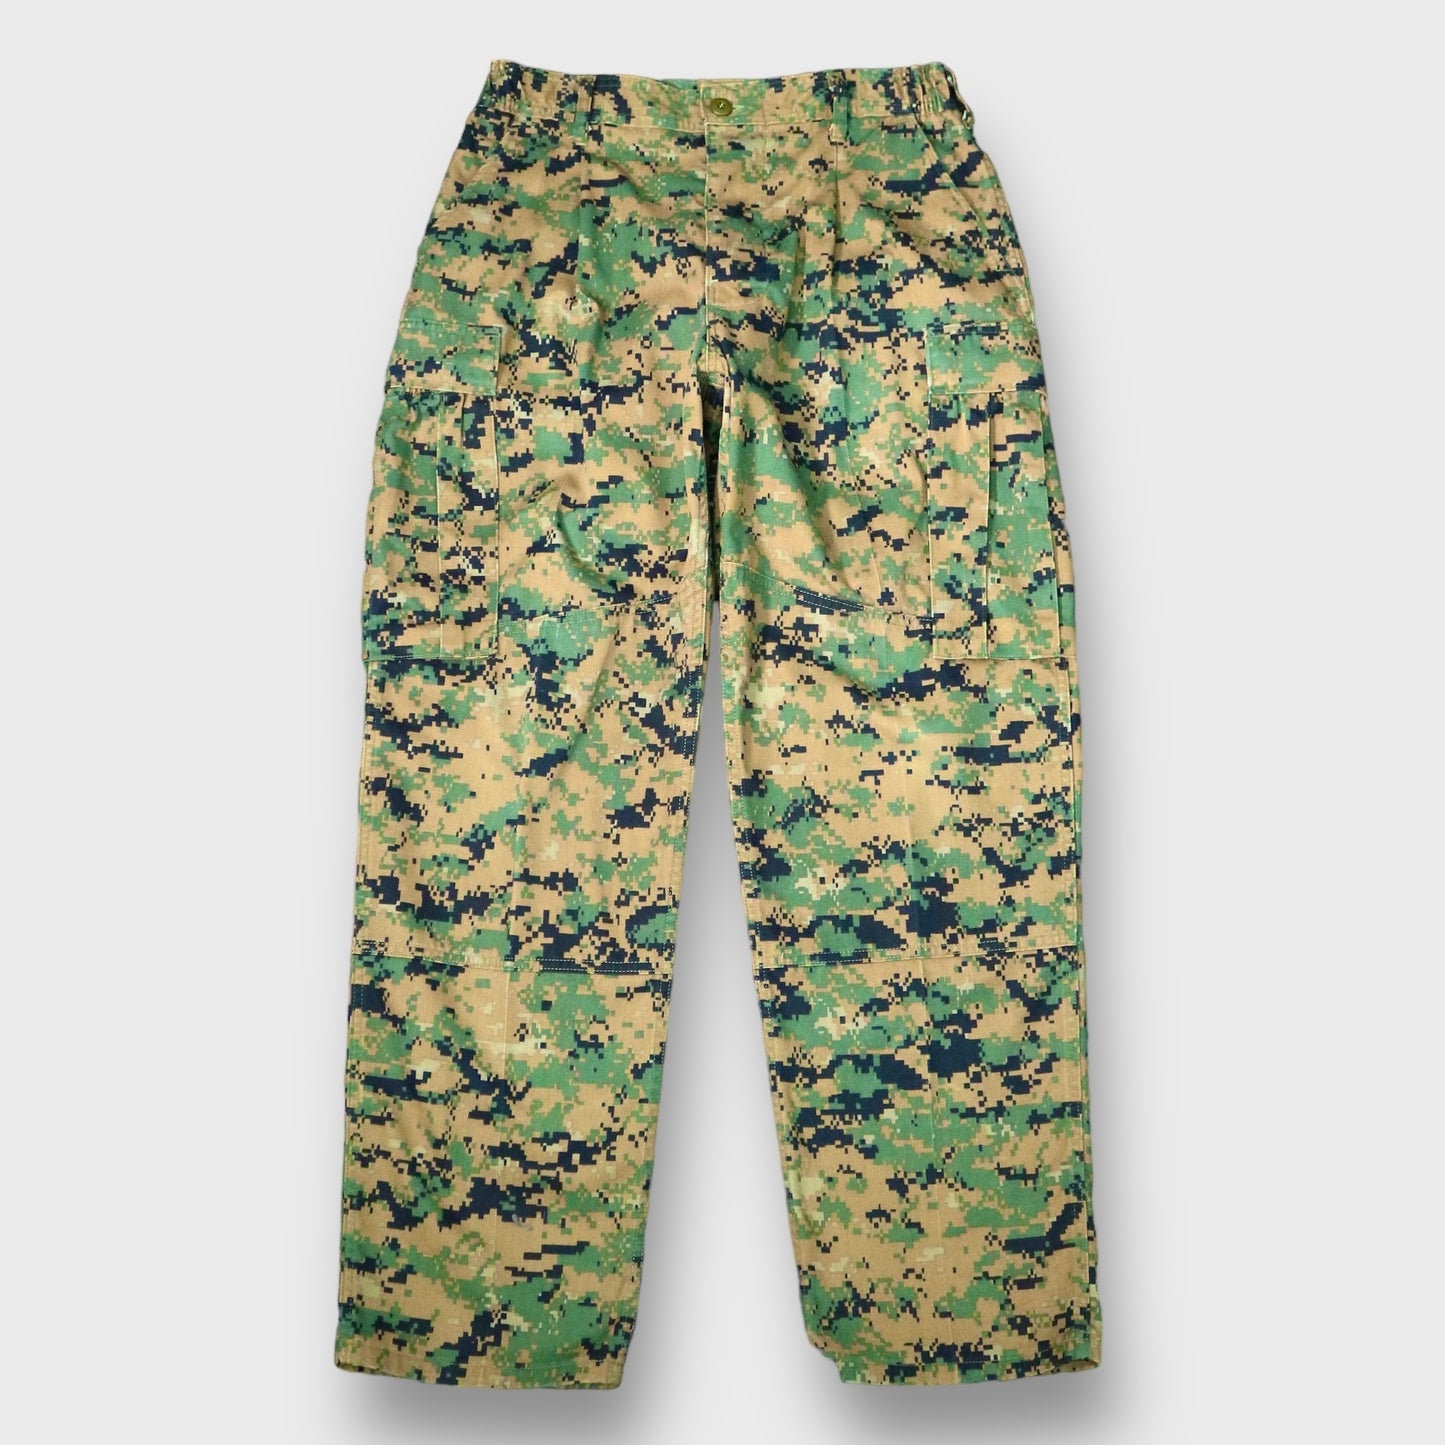 "US army" Digital camouflage pattern field cargo pants